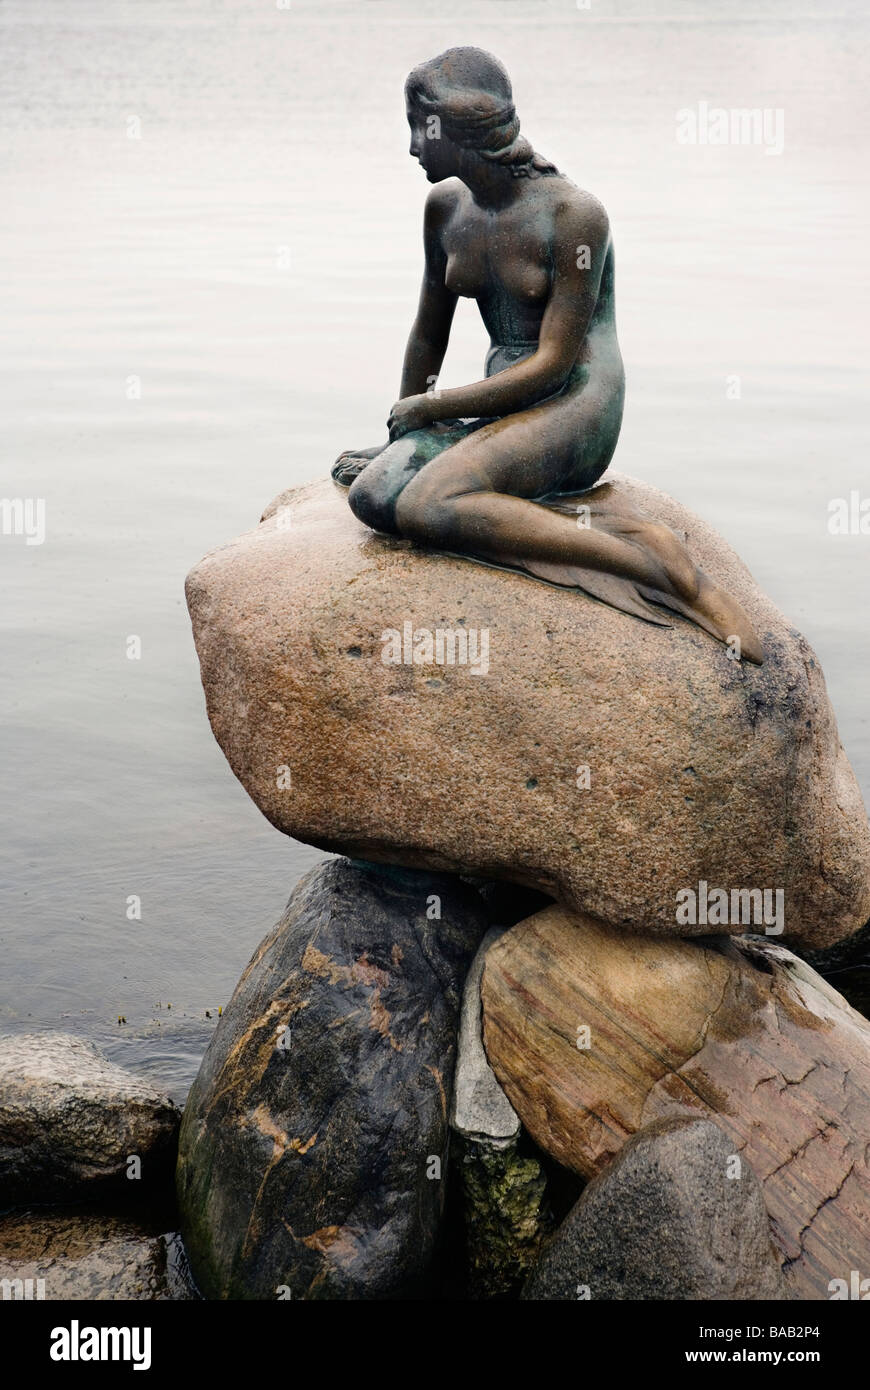 Den lille havfrue, the little mermaid a statue in Copenhagen, Denmark ...